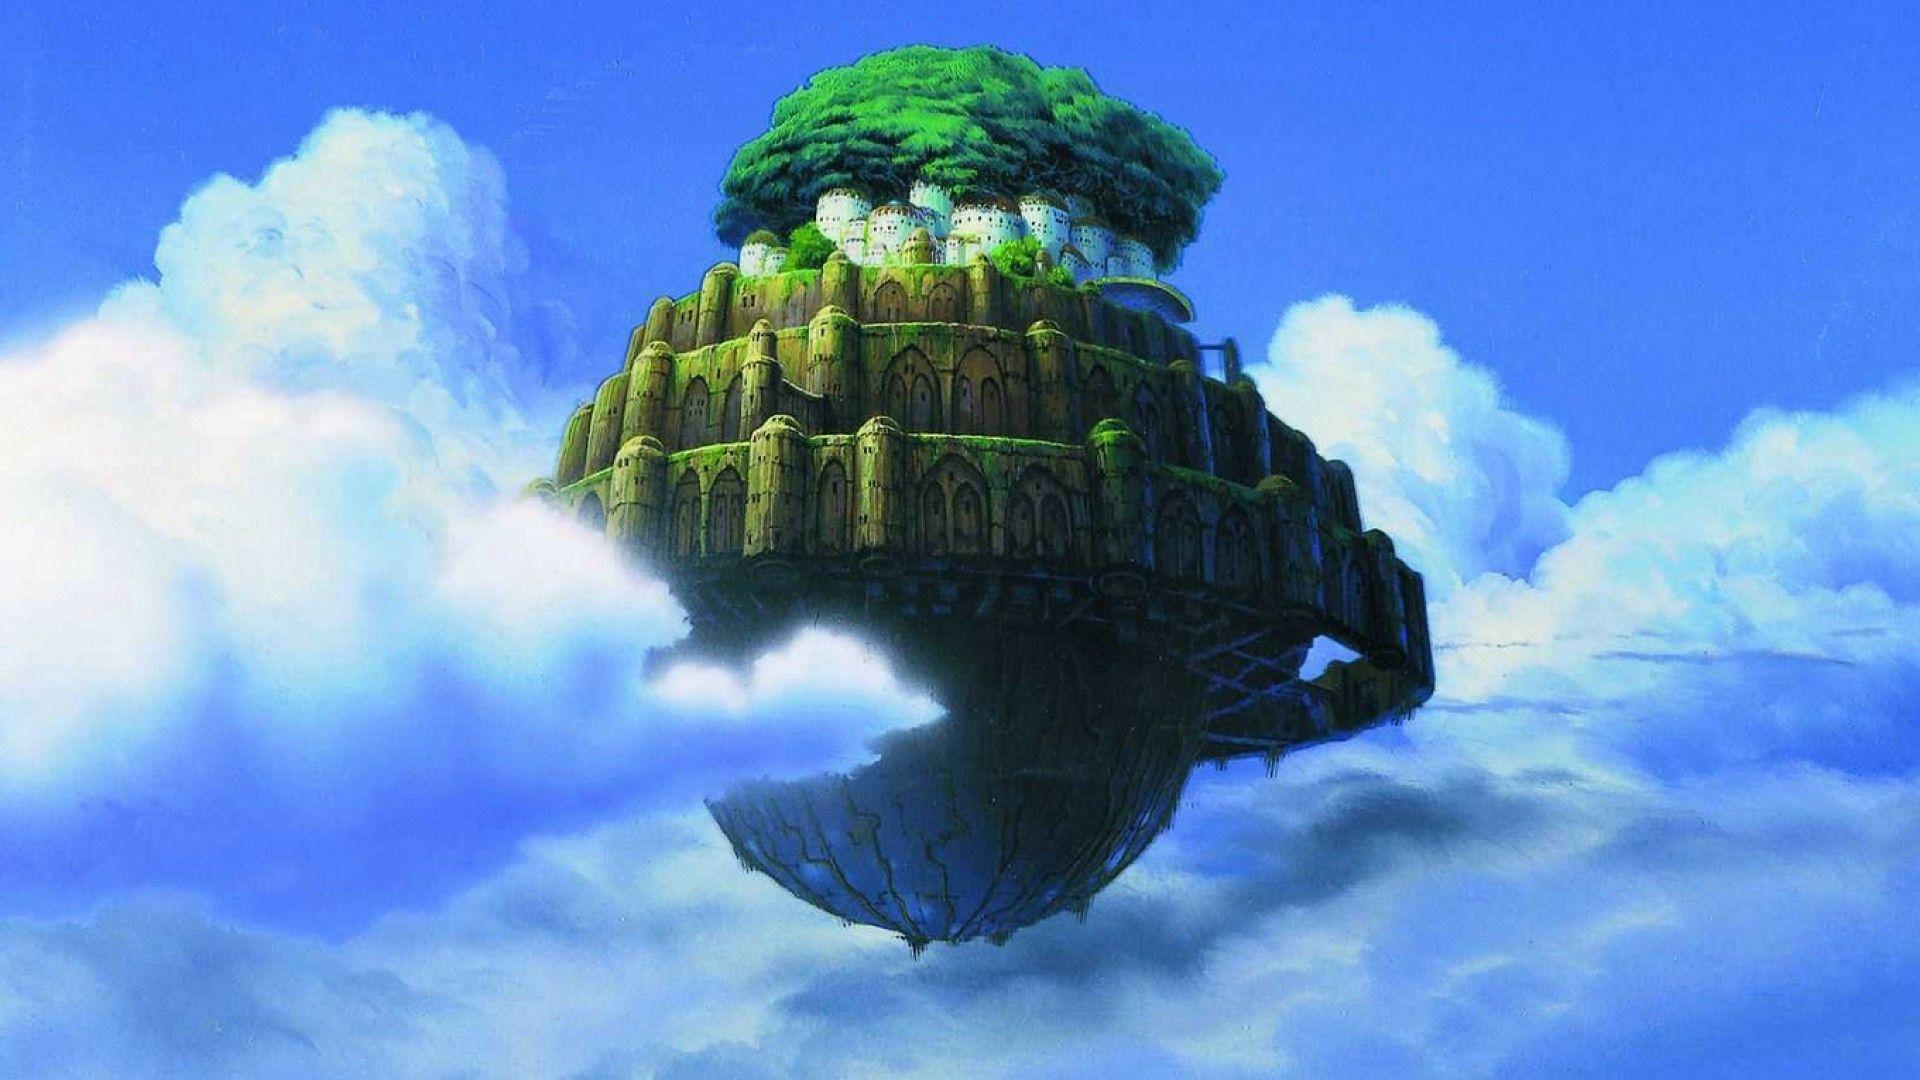 ghibli castle in the sky